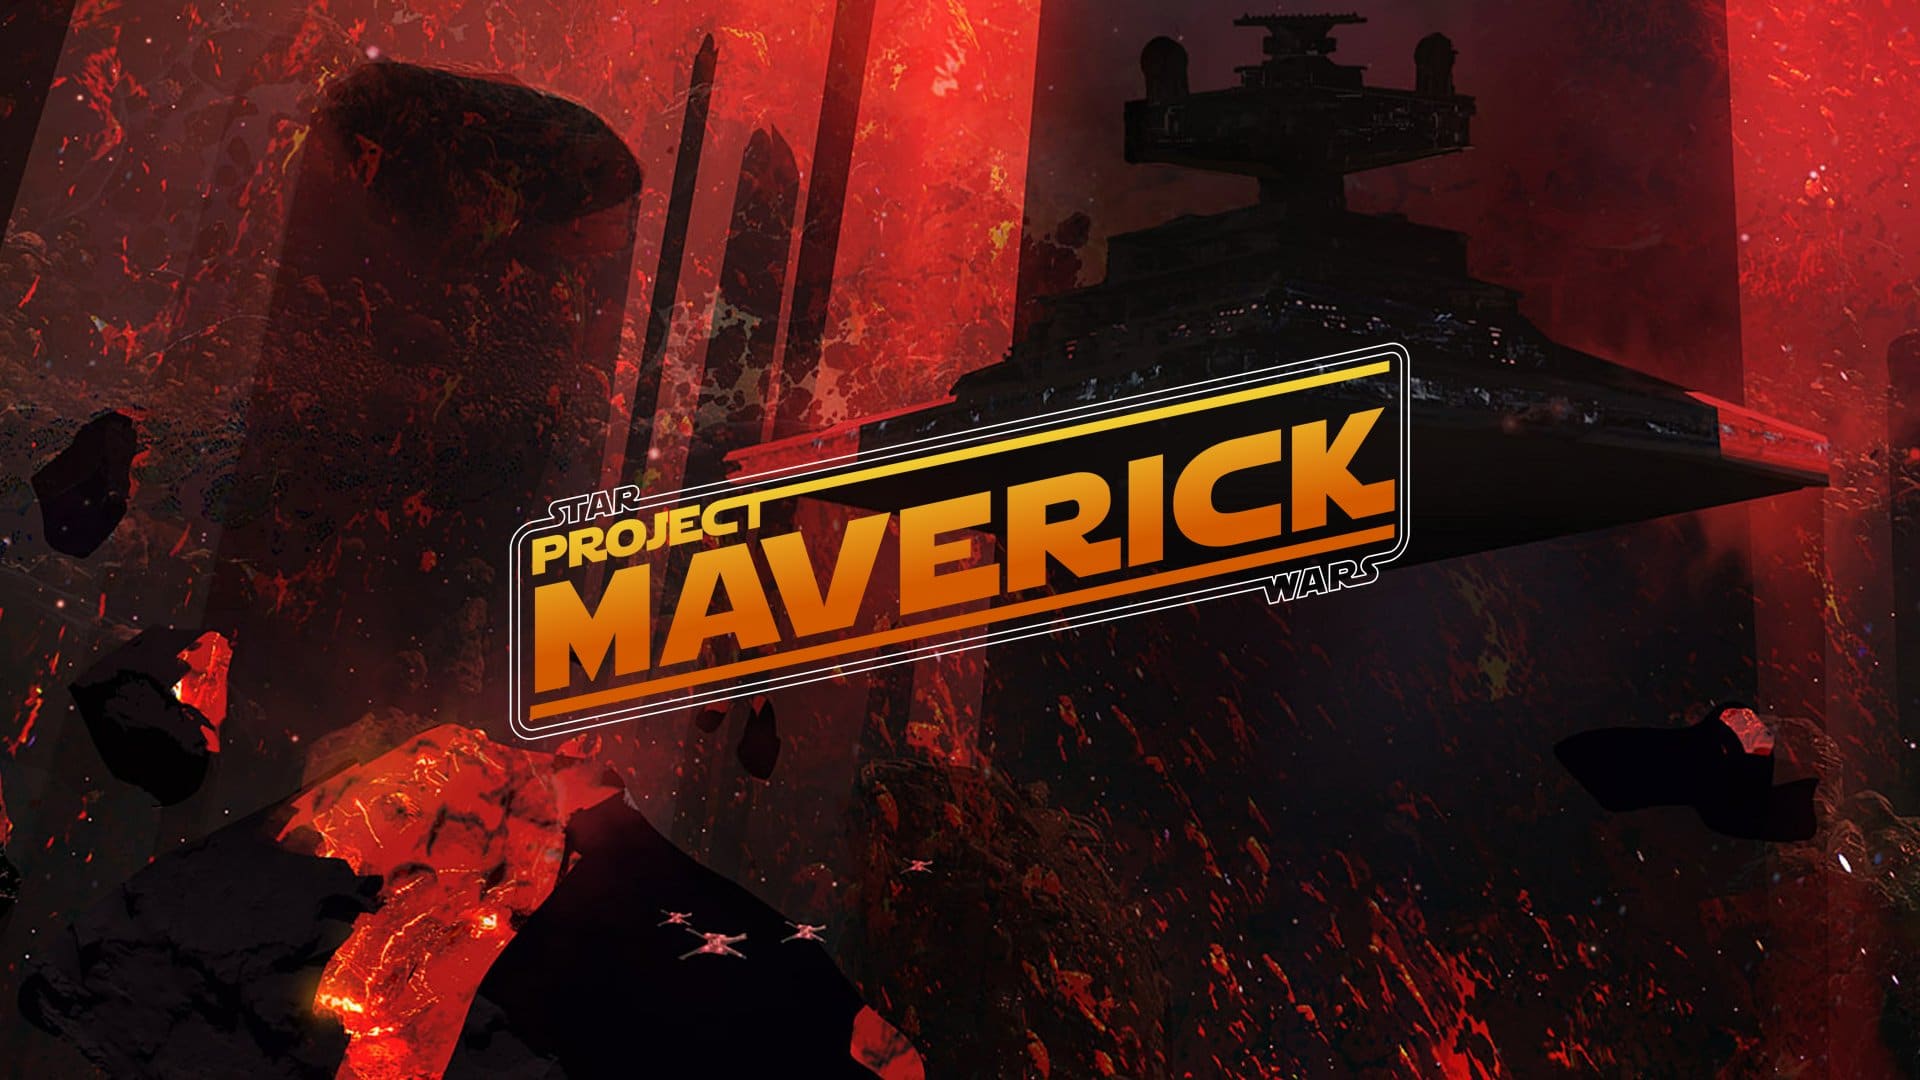 Was erwartet uns in Star Wars "Projekt Maverick"?